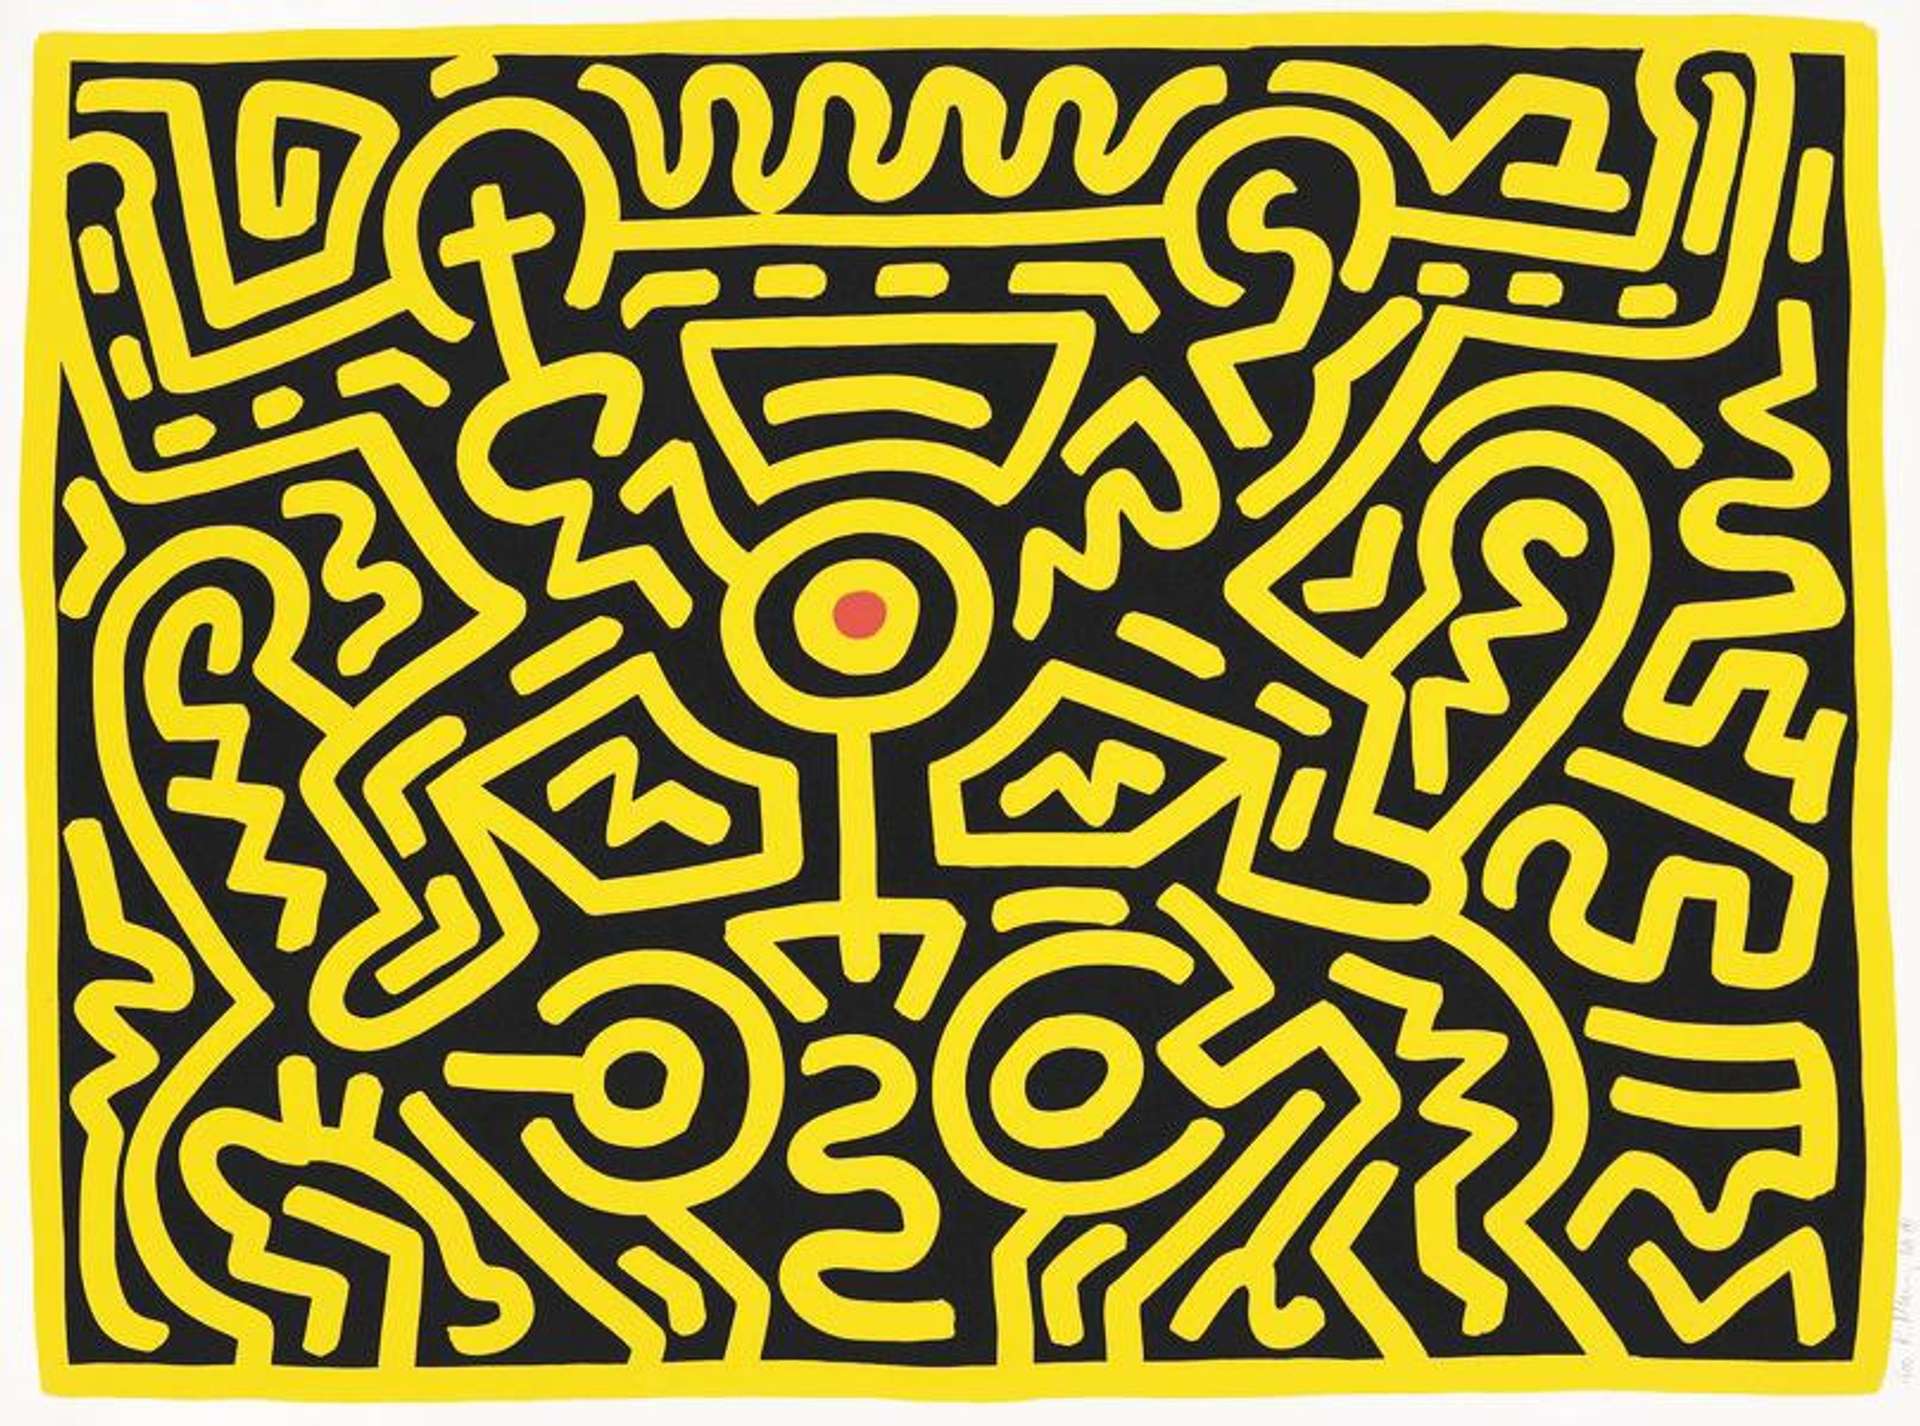 Growing 3 - Signed Print by Keith Haring 1988 - MyArtBroker